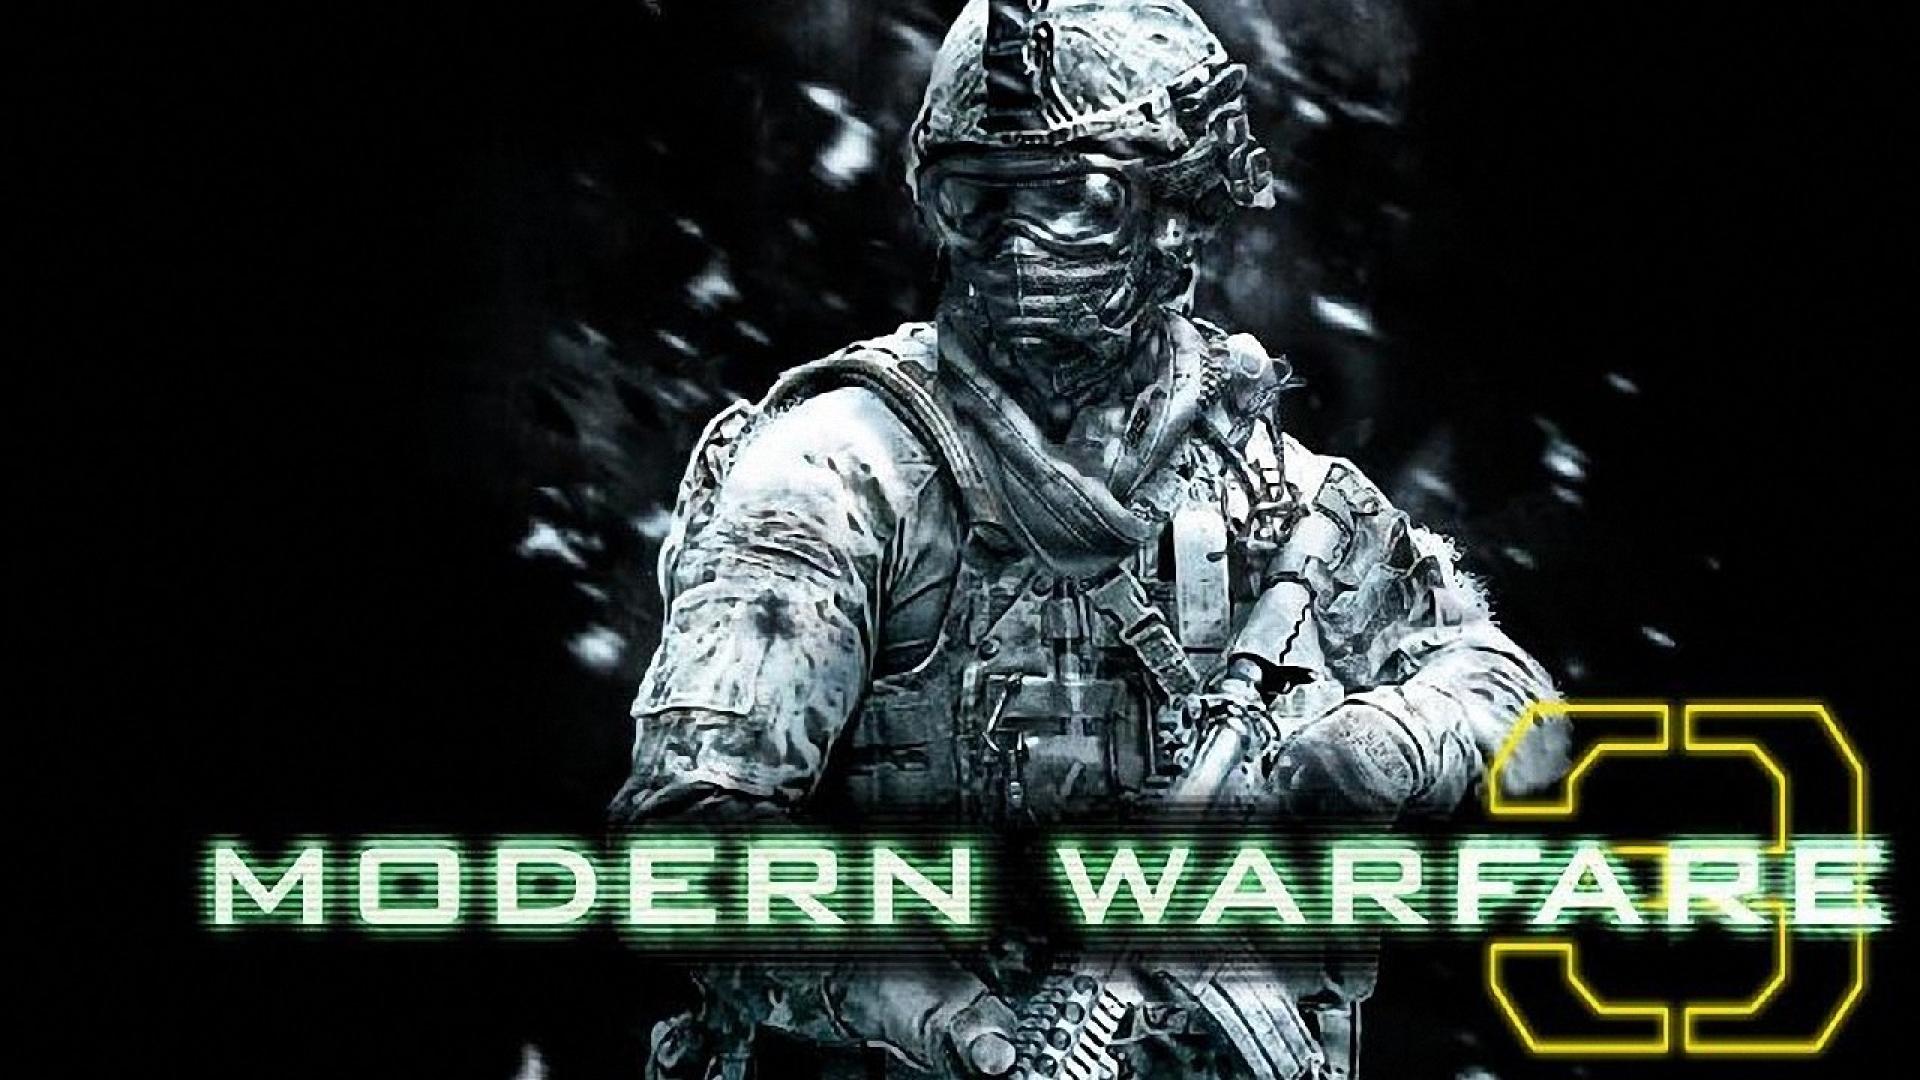 Modern Warfare 3 1920x1080 Wallpapers, 1920x1080 Wallpapers ...